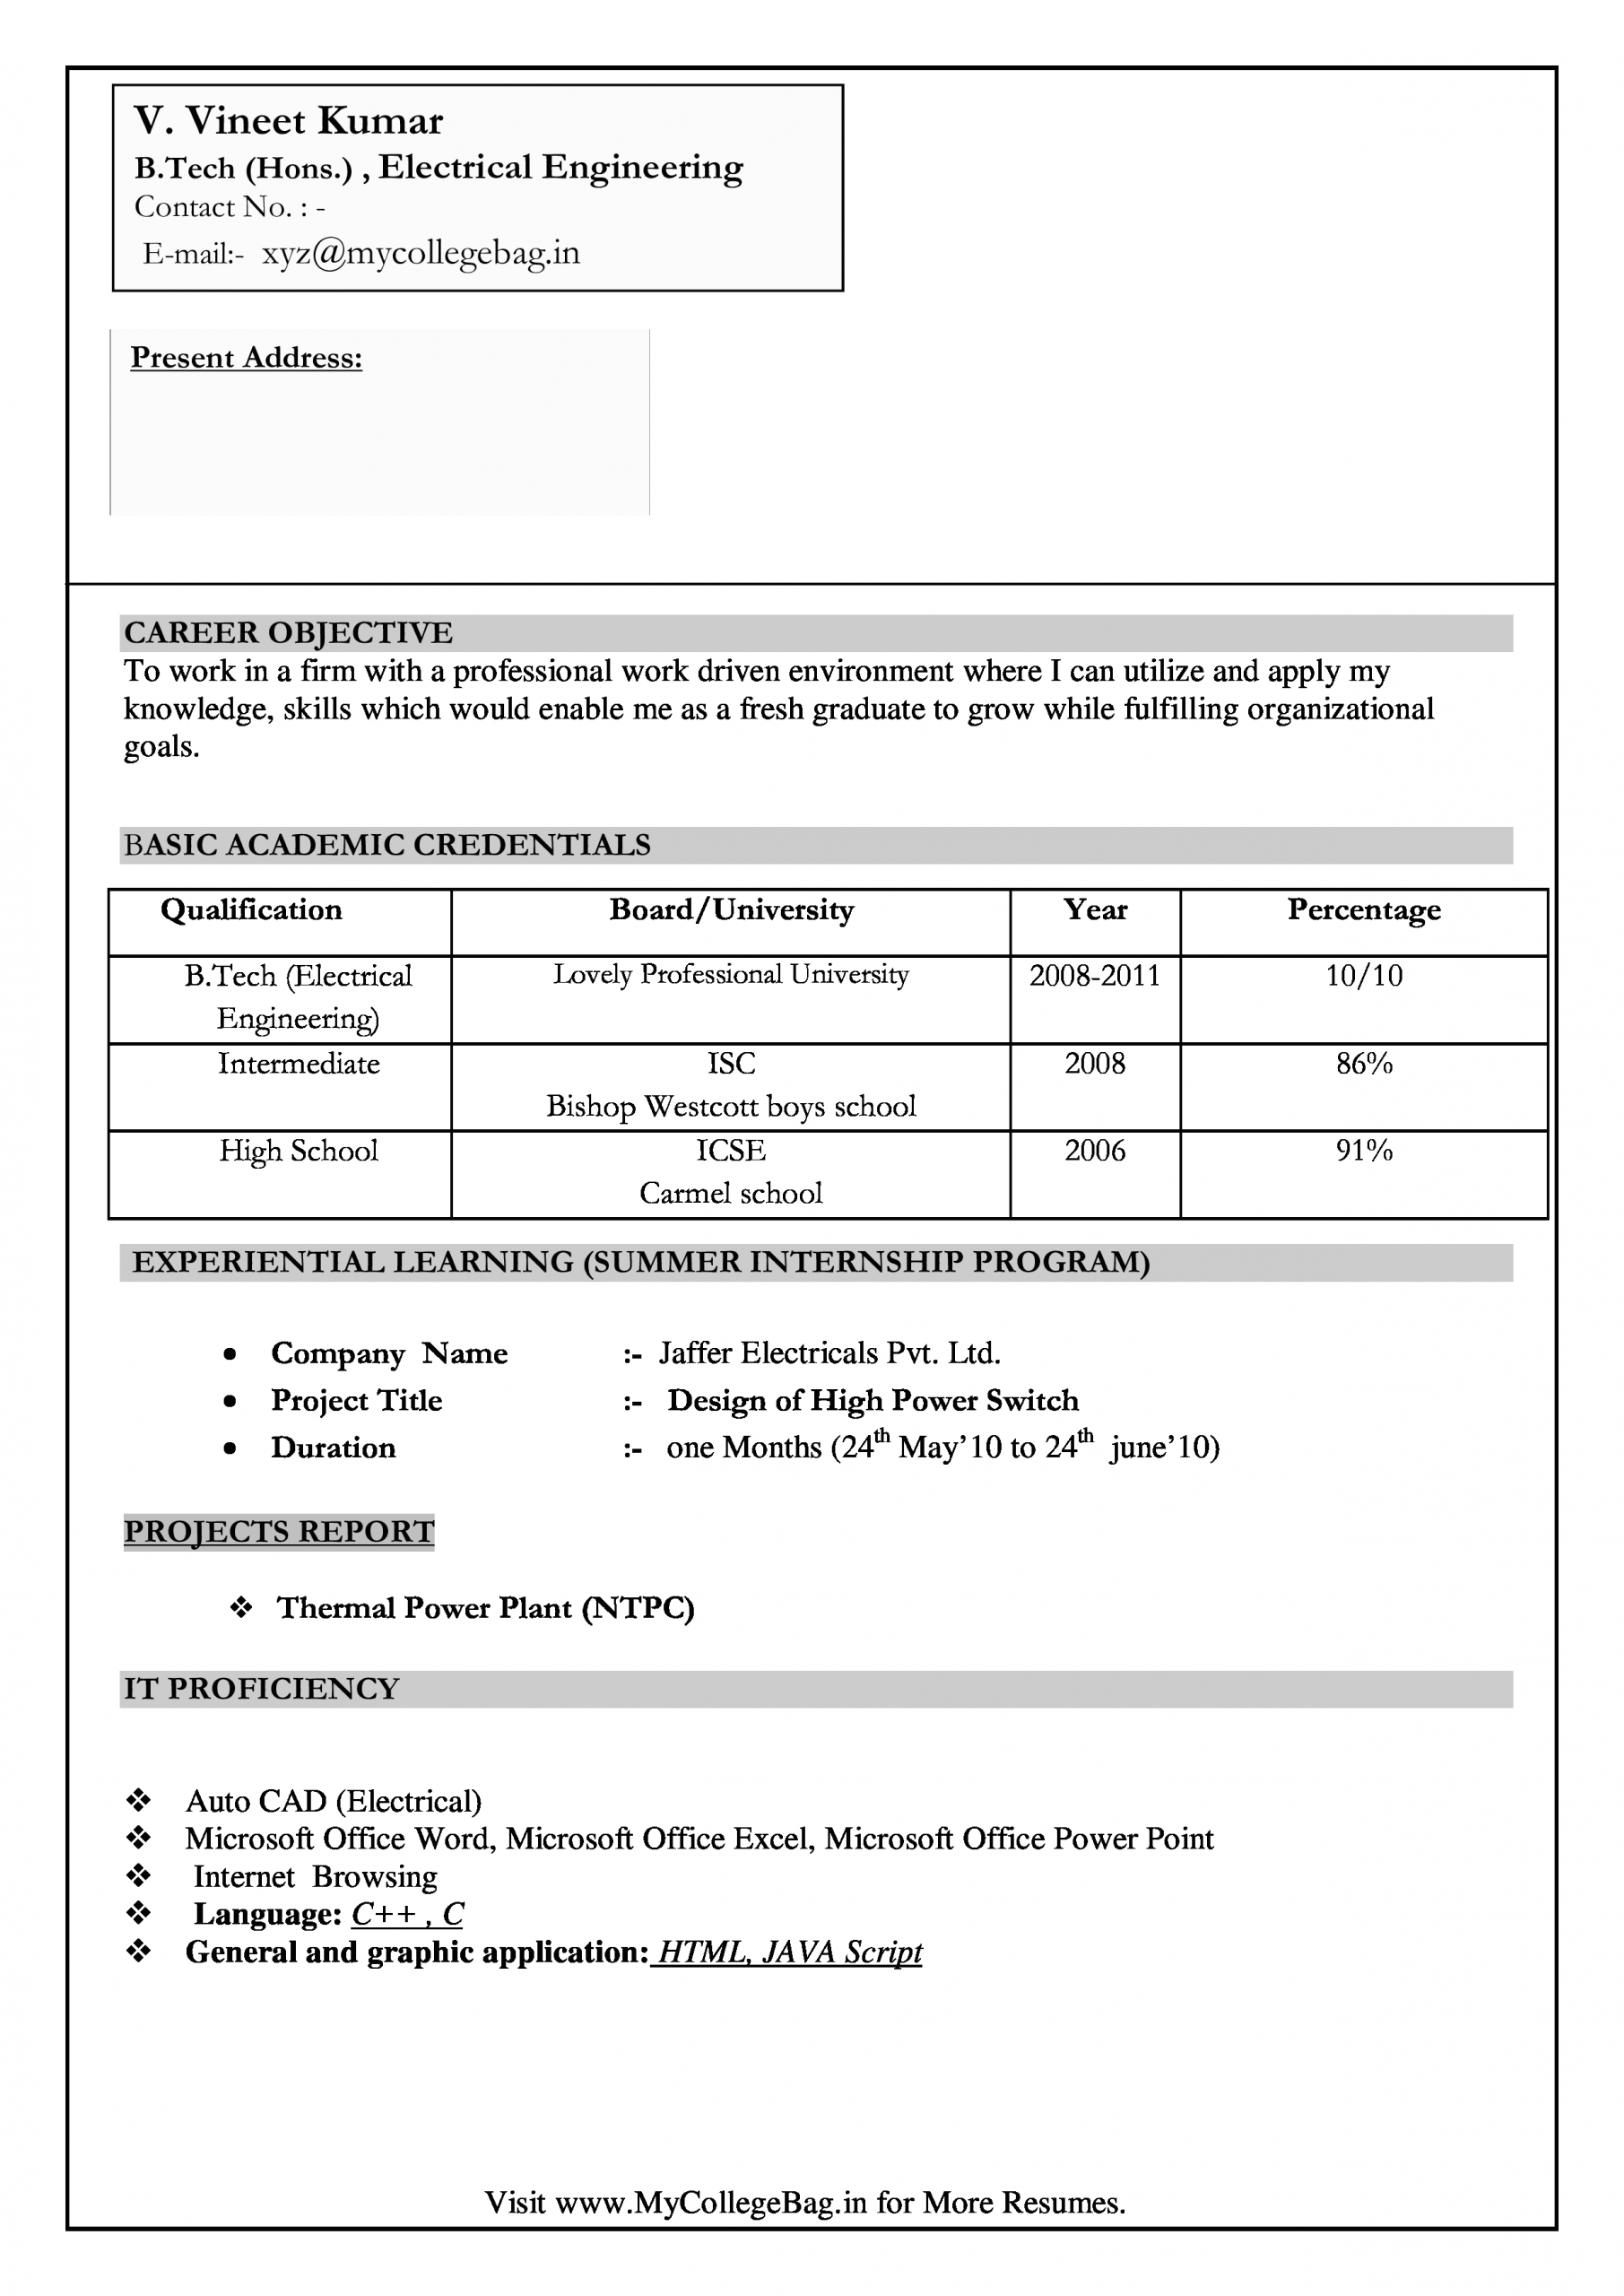 Best Sample Resume for Freshers Engineers Engineering Fresher Resume format Download In Ms Word